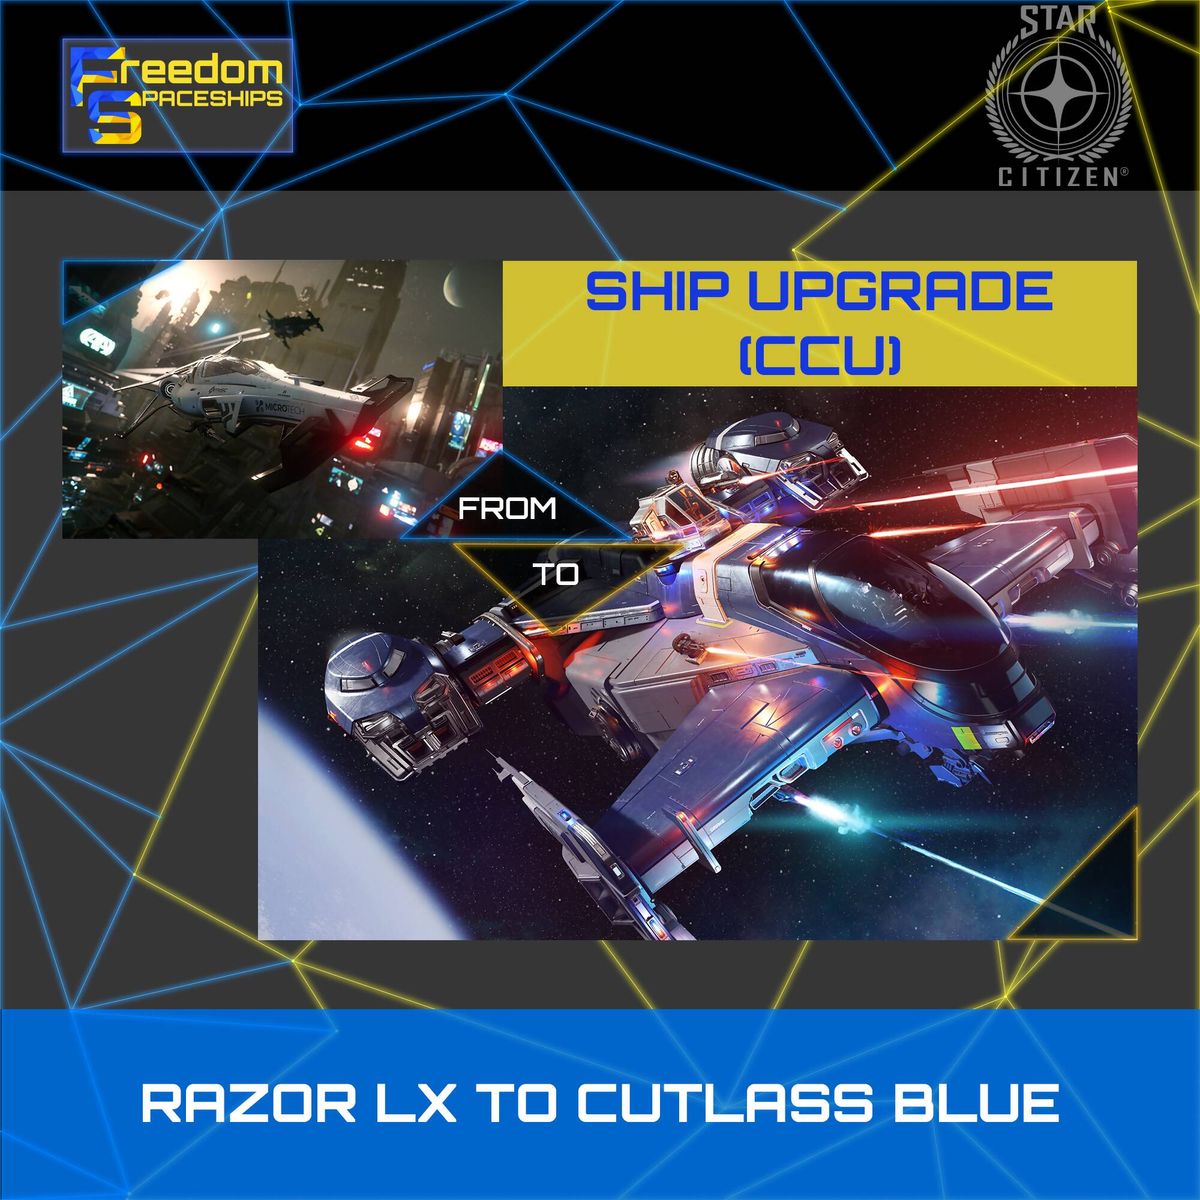 Upgrade - Razor LX to Cutlass Blue